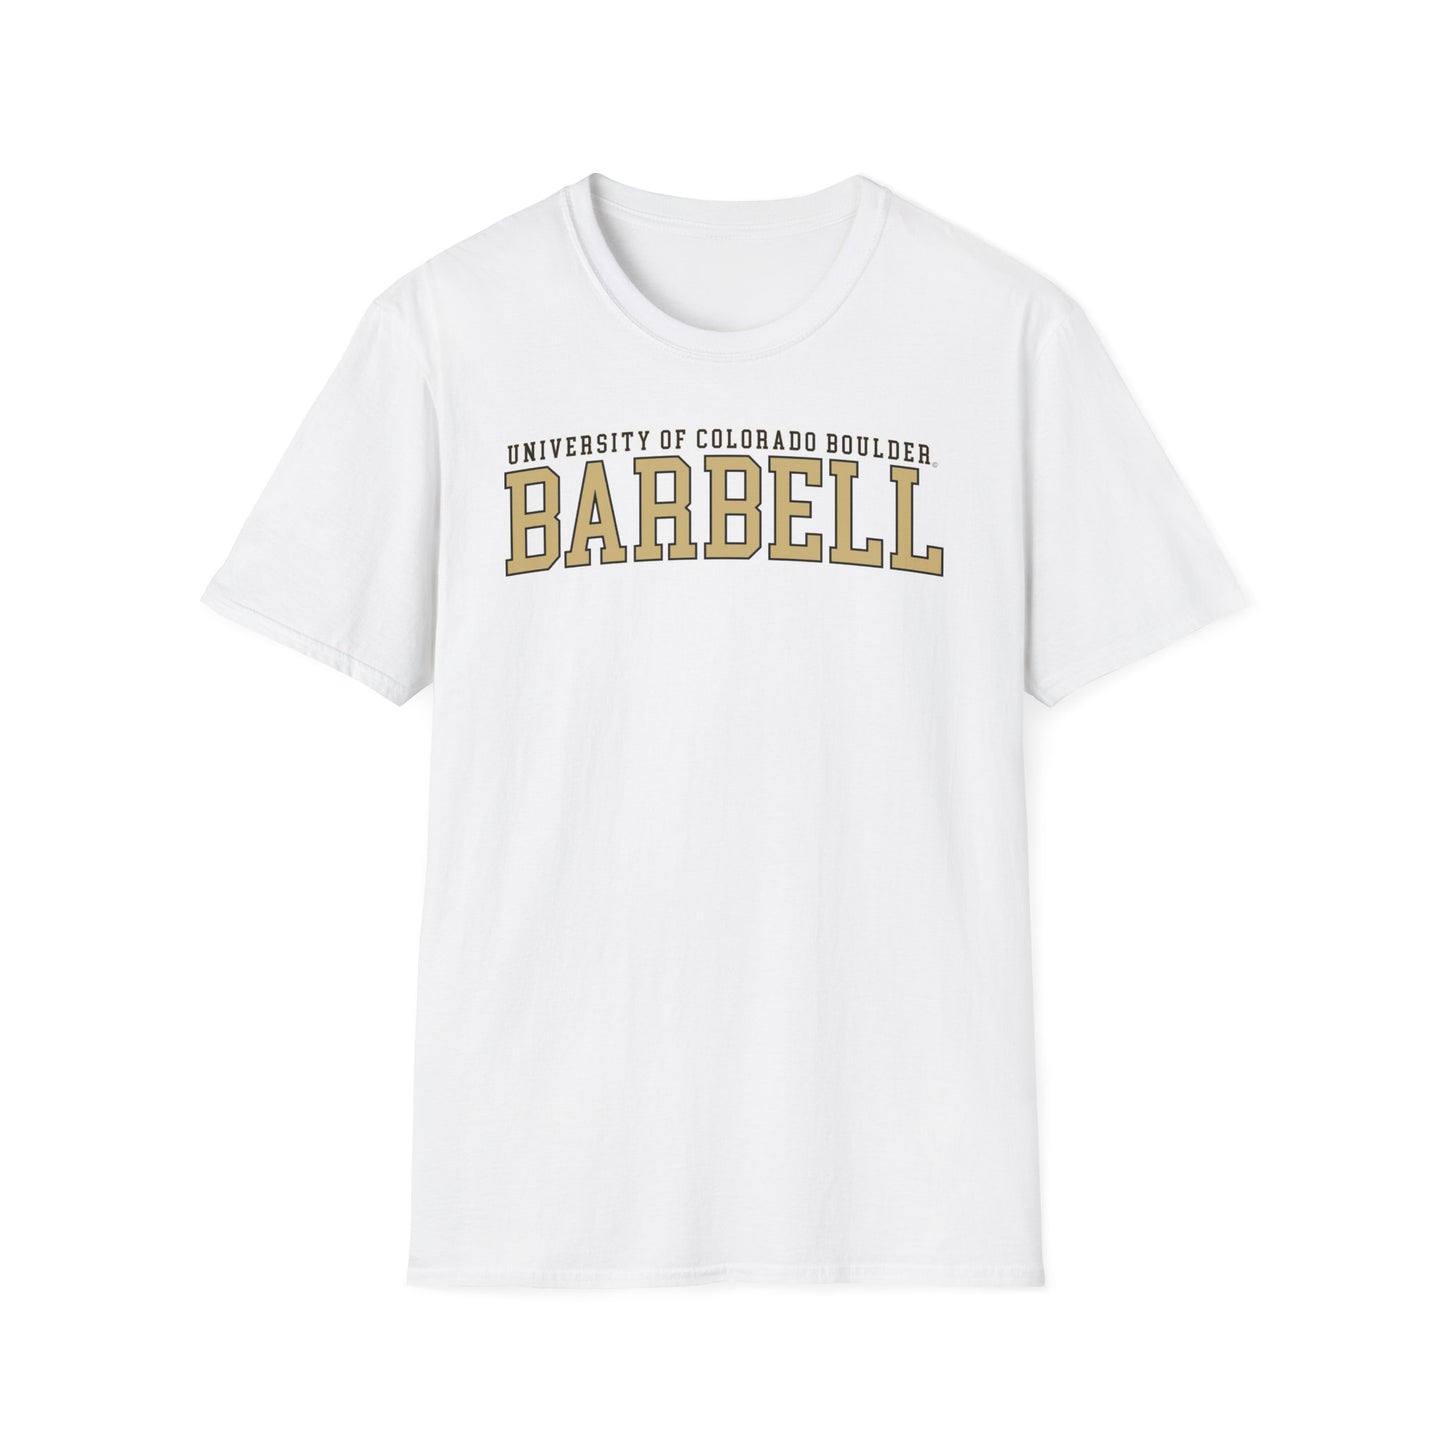 CU Barbell Core Values T-Shirt: Community